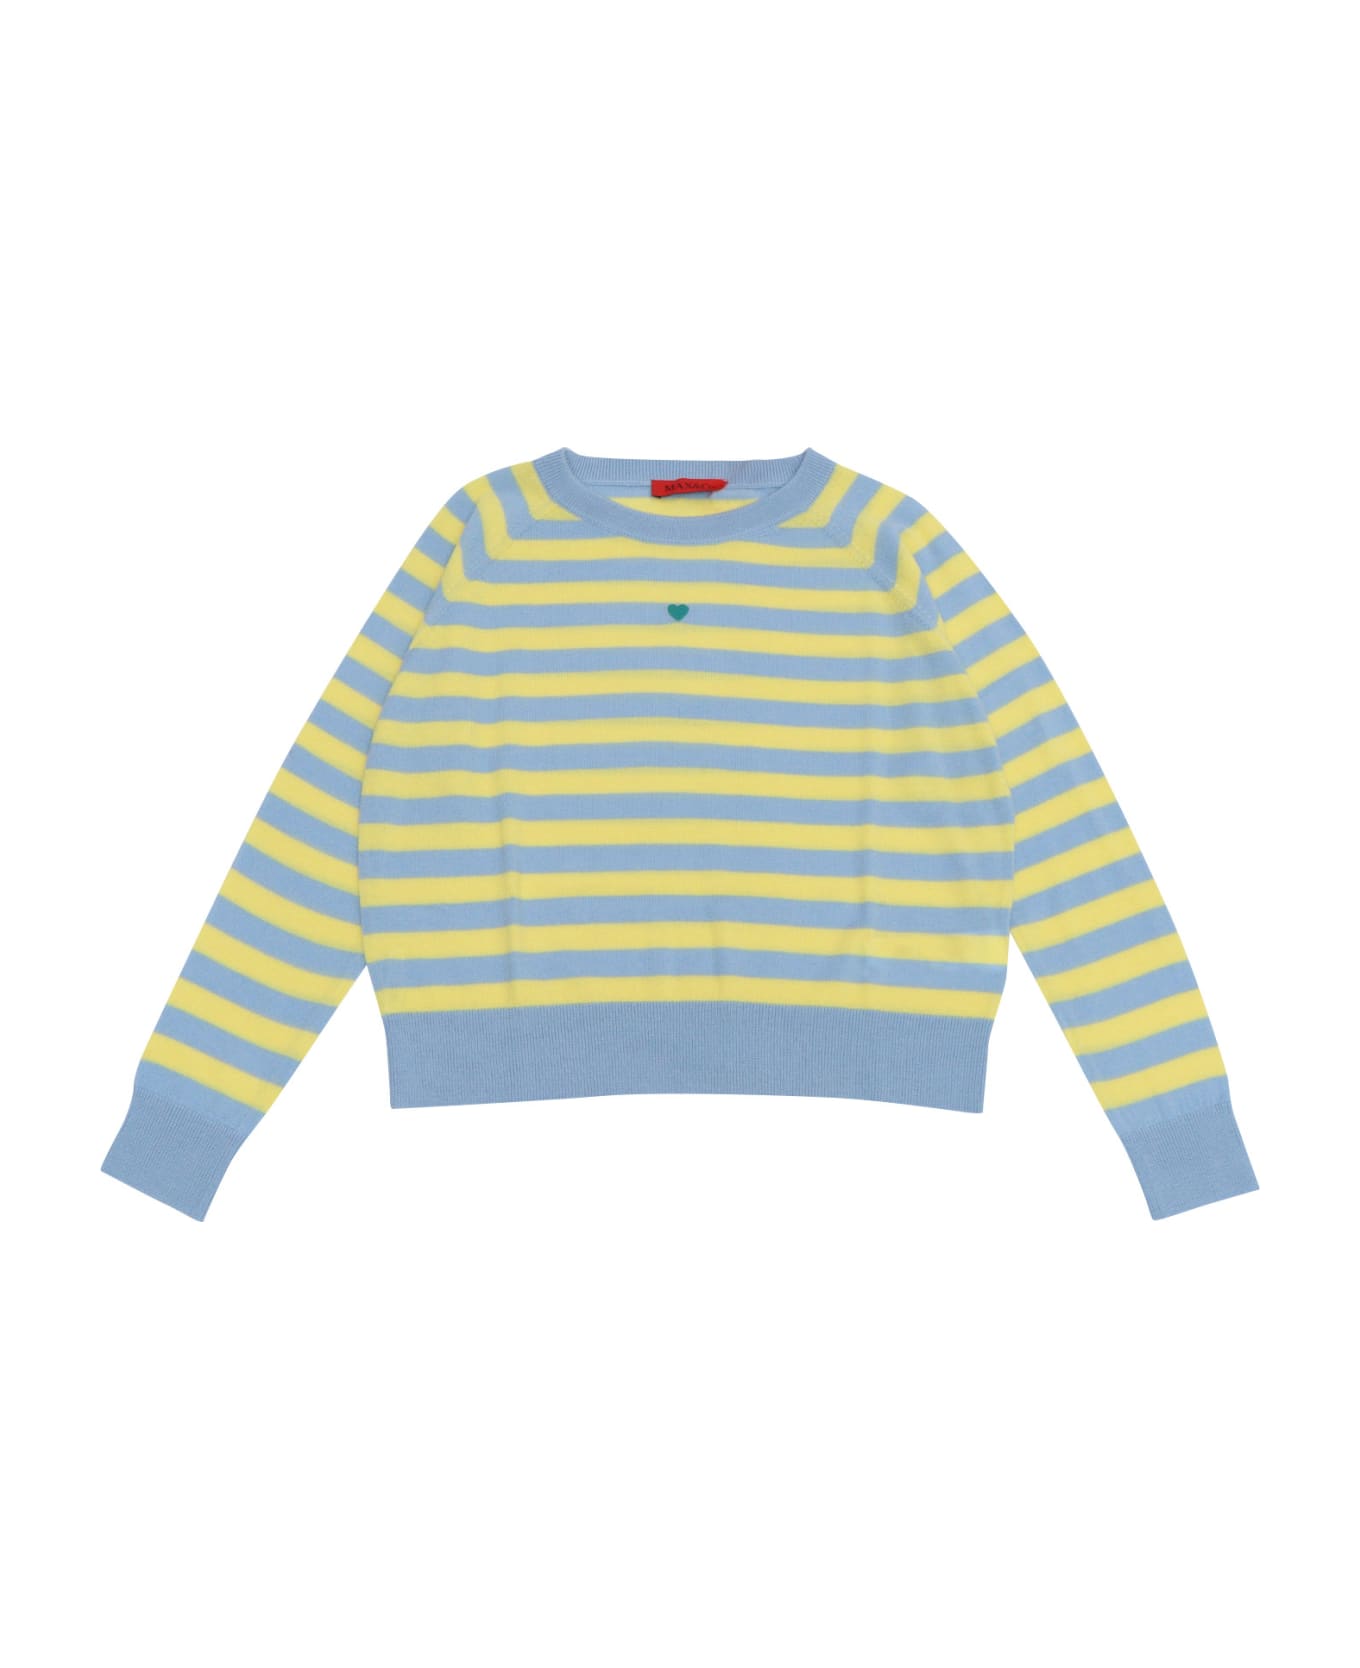 Max&Co. Striped Sweater - BLUE